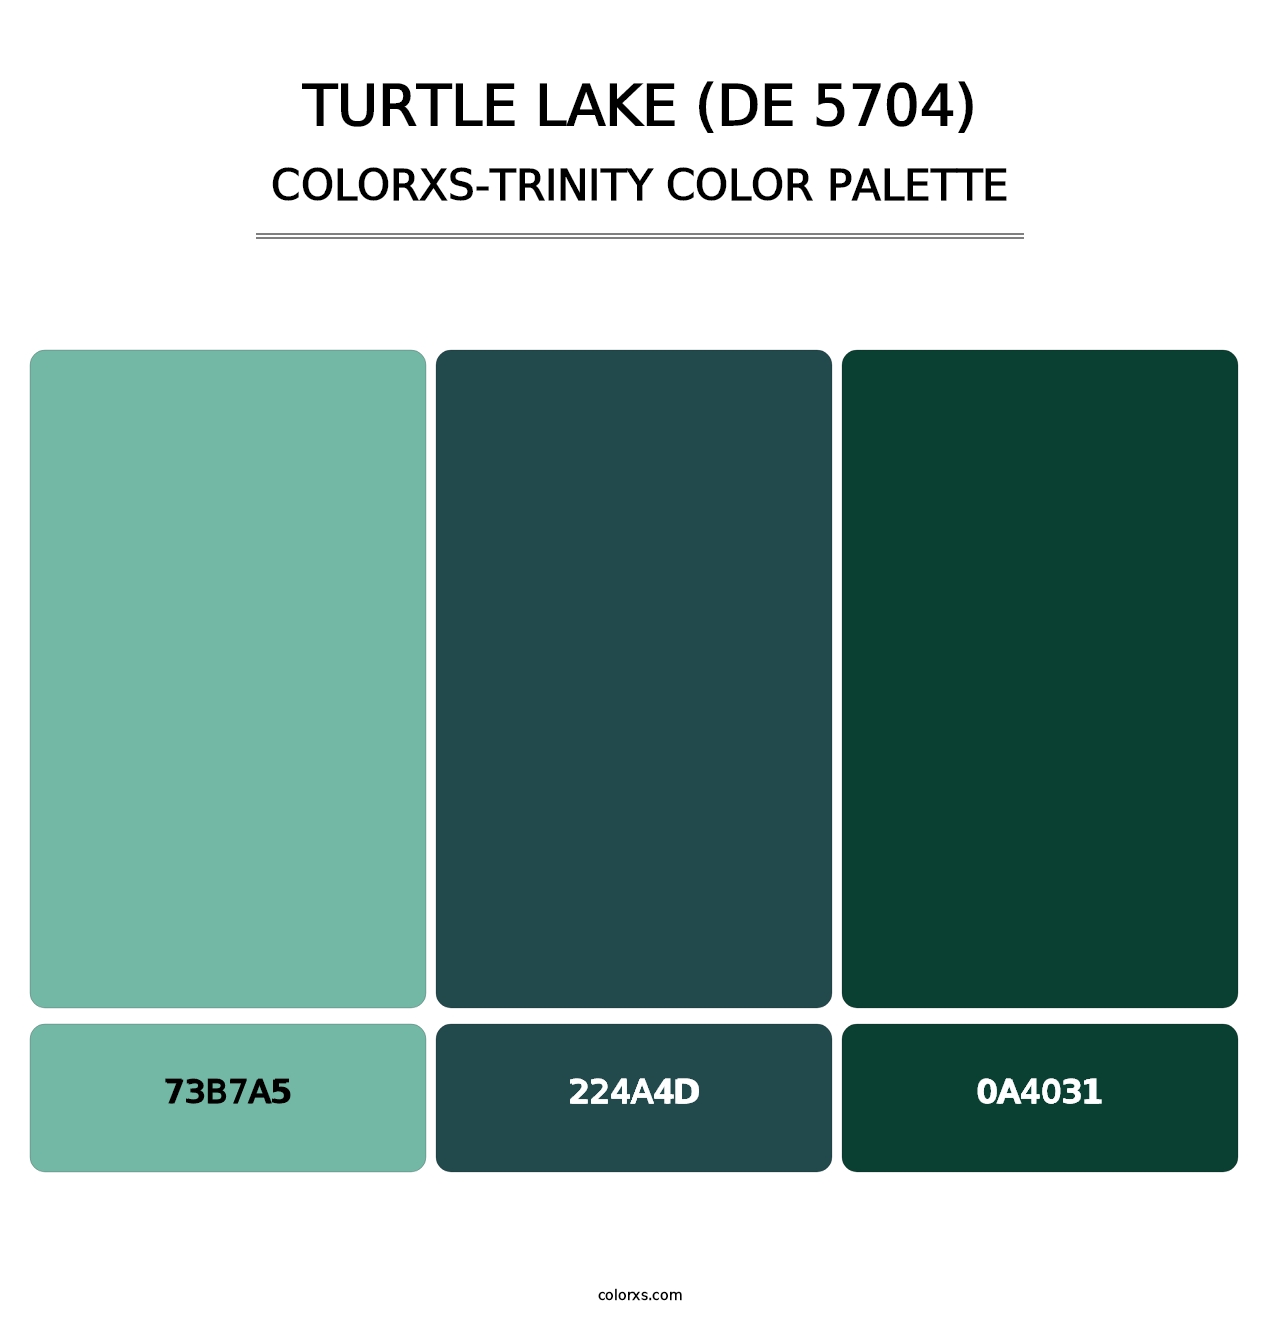 Turtle Lake (DE 5704) - Colorxs Trinity Palette